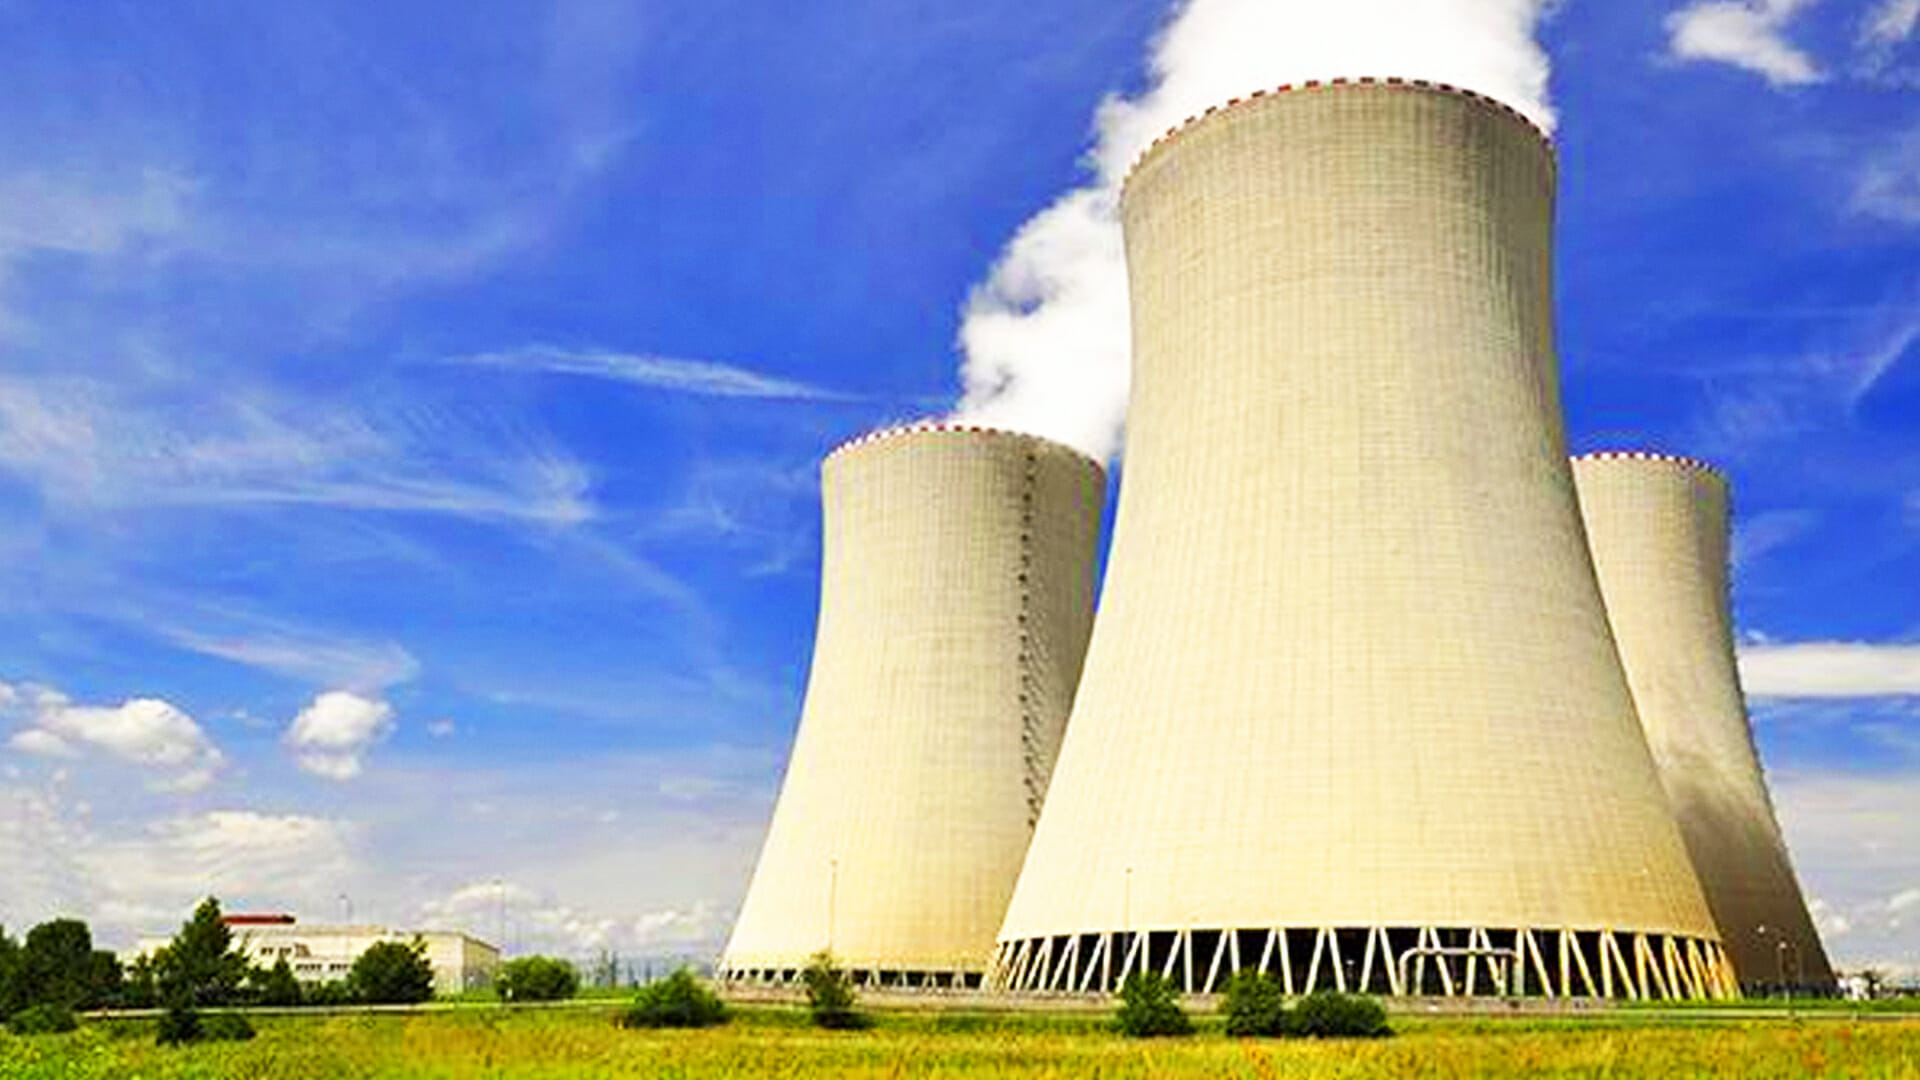 Атомная электростанция картинки. АЭС Моховце Словакия. Электроэнергетика АЭС. Атомная энергия АЭС. Энергетика Японии ТЭС.